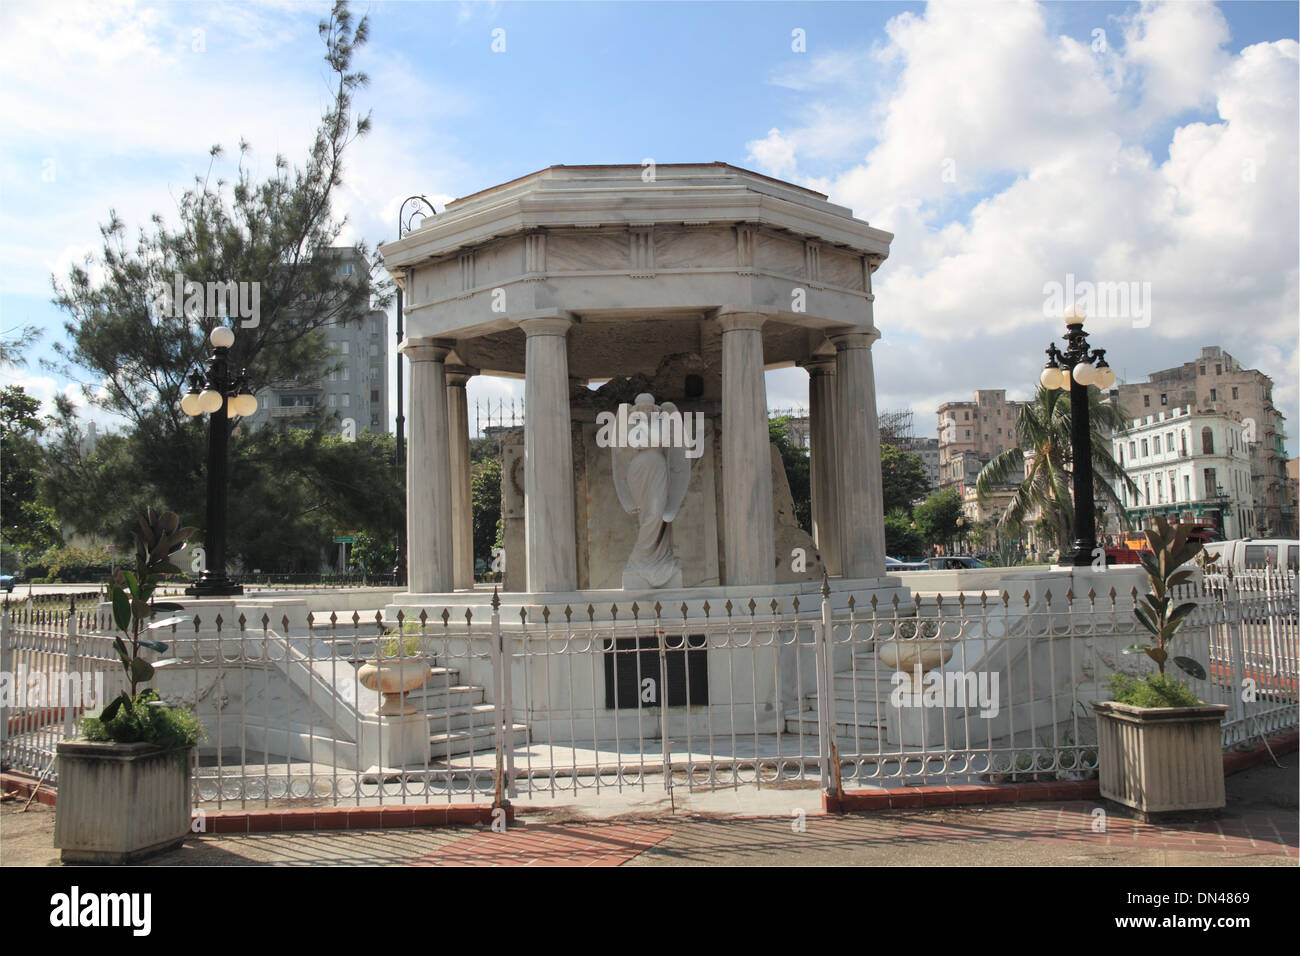 Memorial a los Estudiantes de Medicina, Malecón, Old Havana (La Habana Vieja), Cuba, Caribbean Sea, Central America Stock Photo